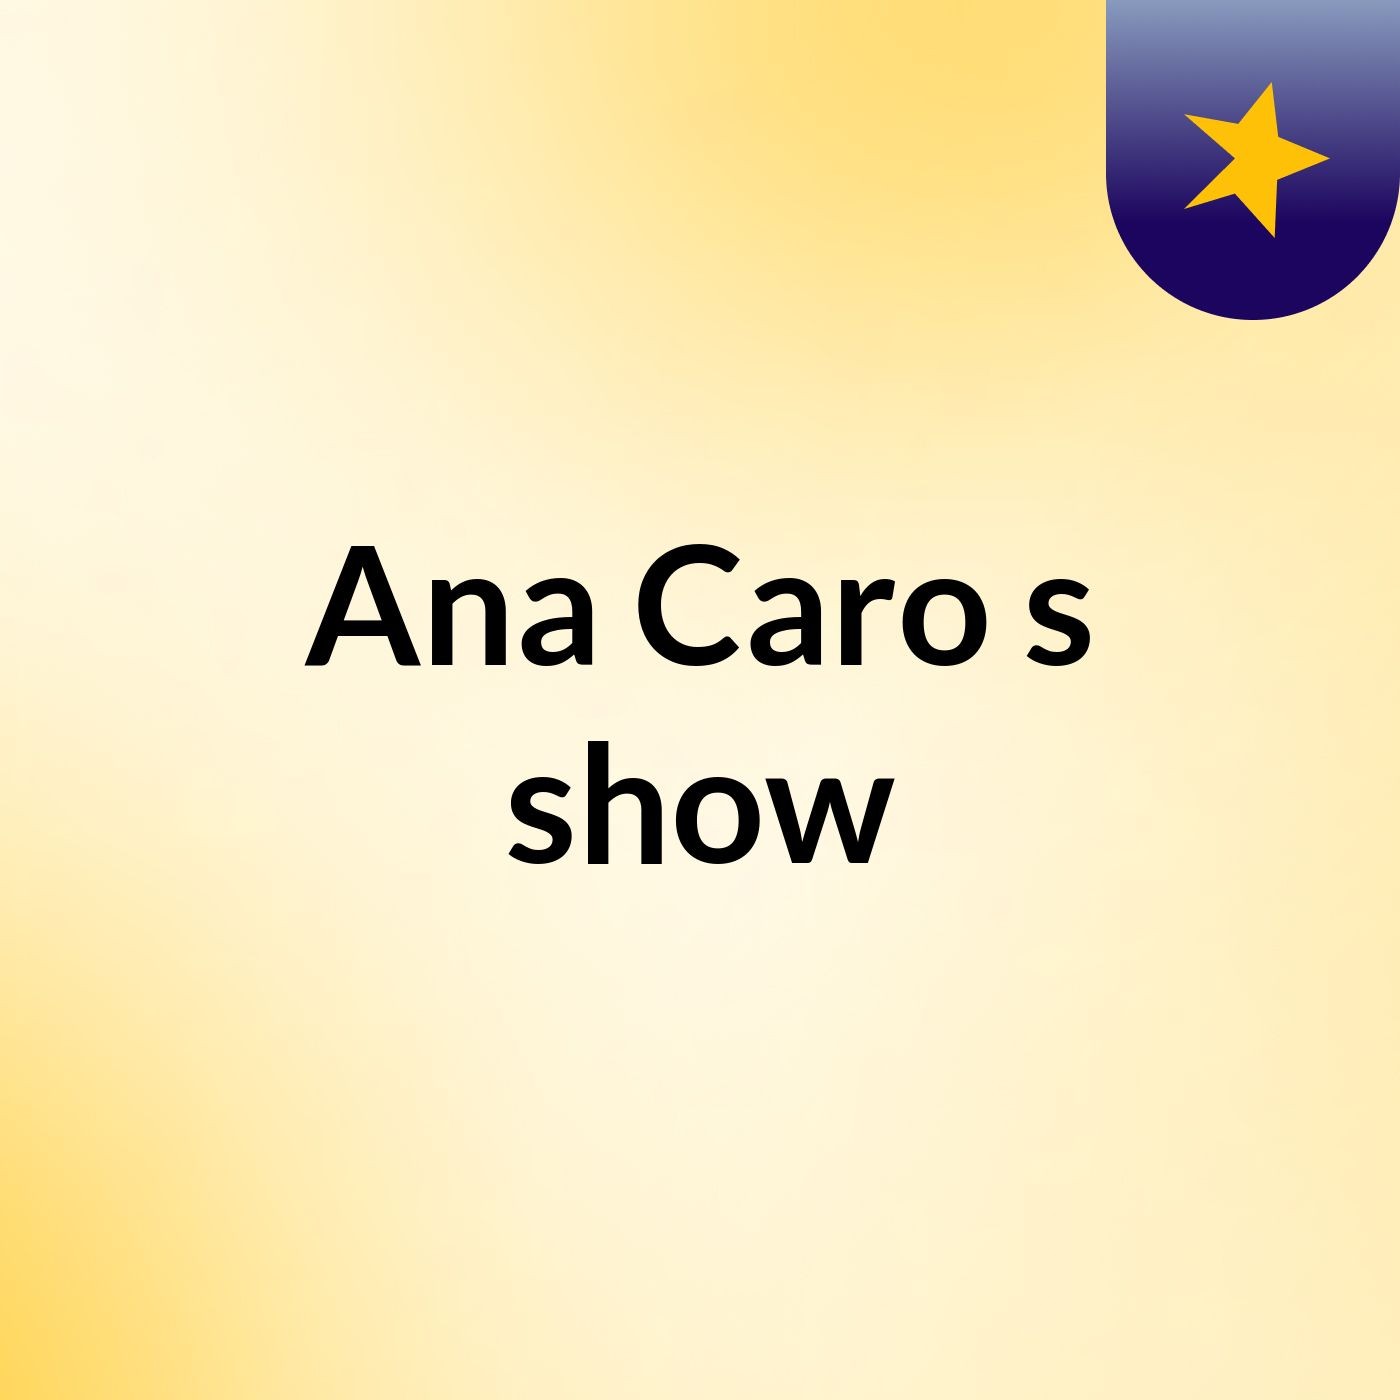 Ana Caro's show